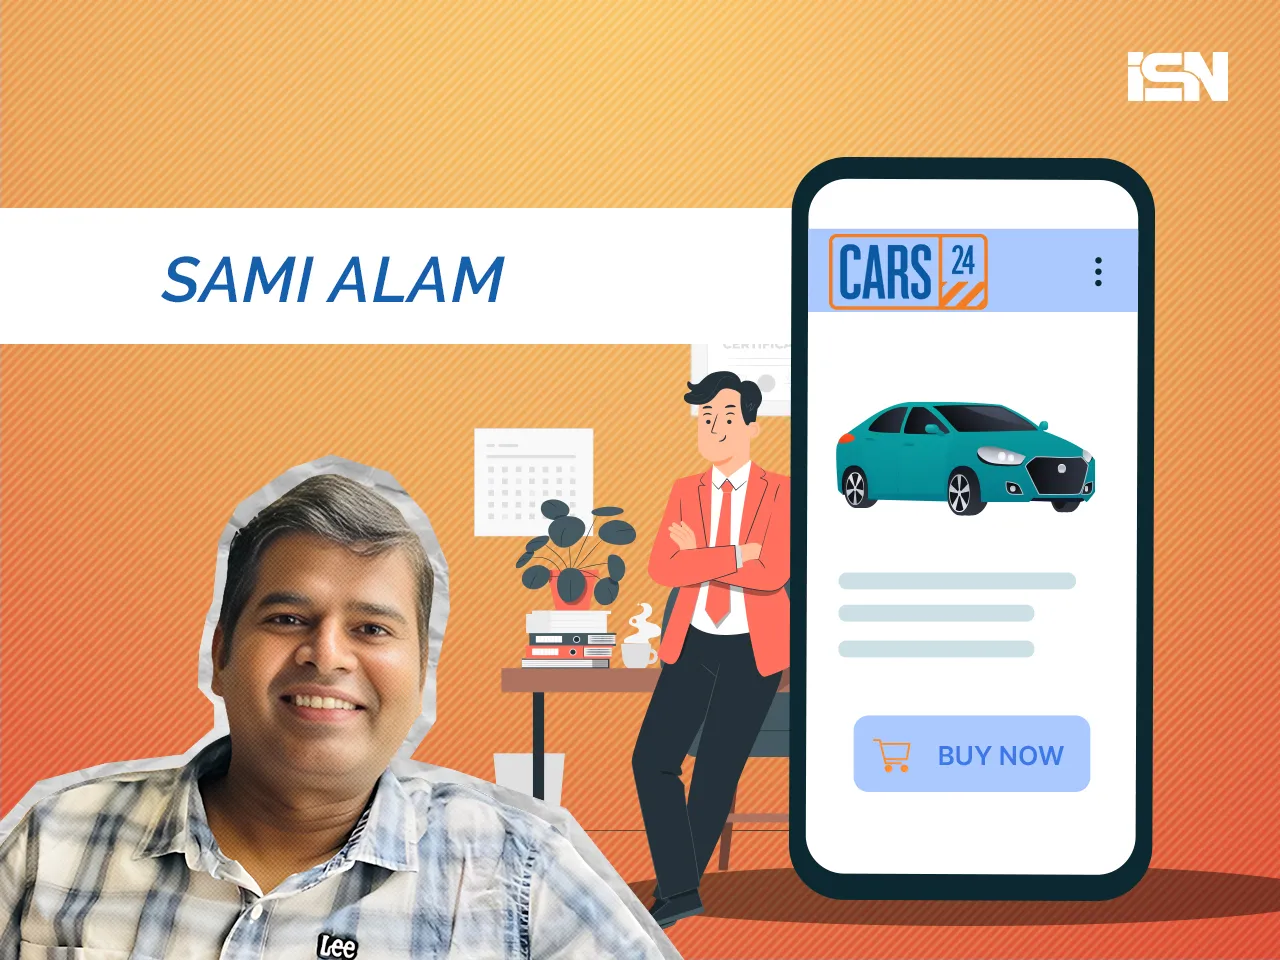 Sami alam joining Cars24 